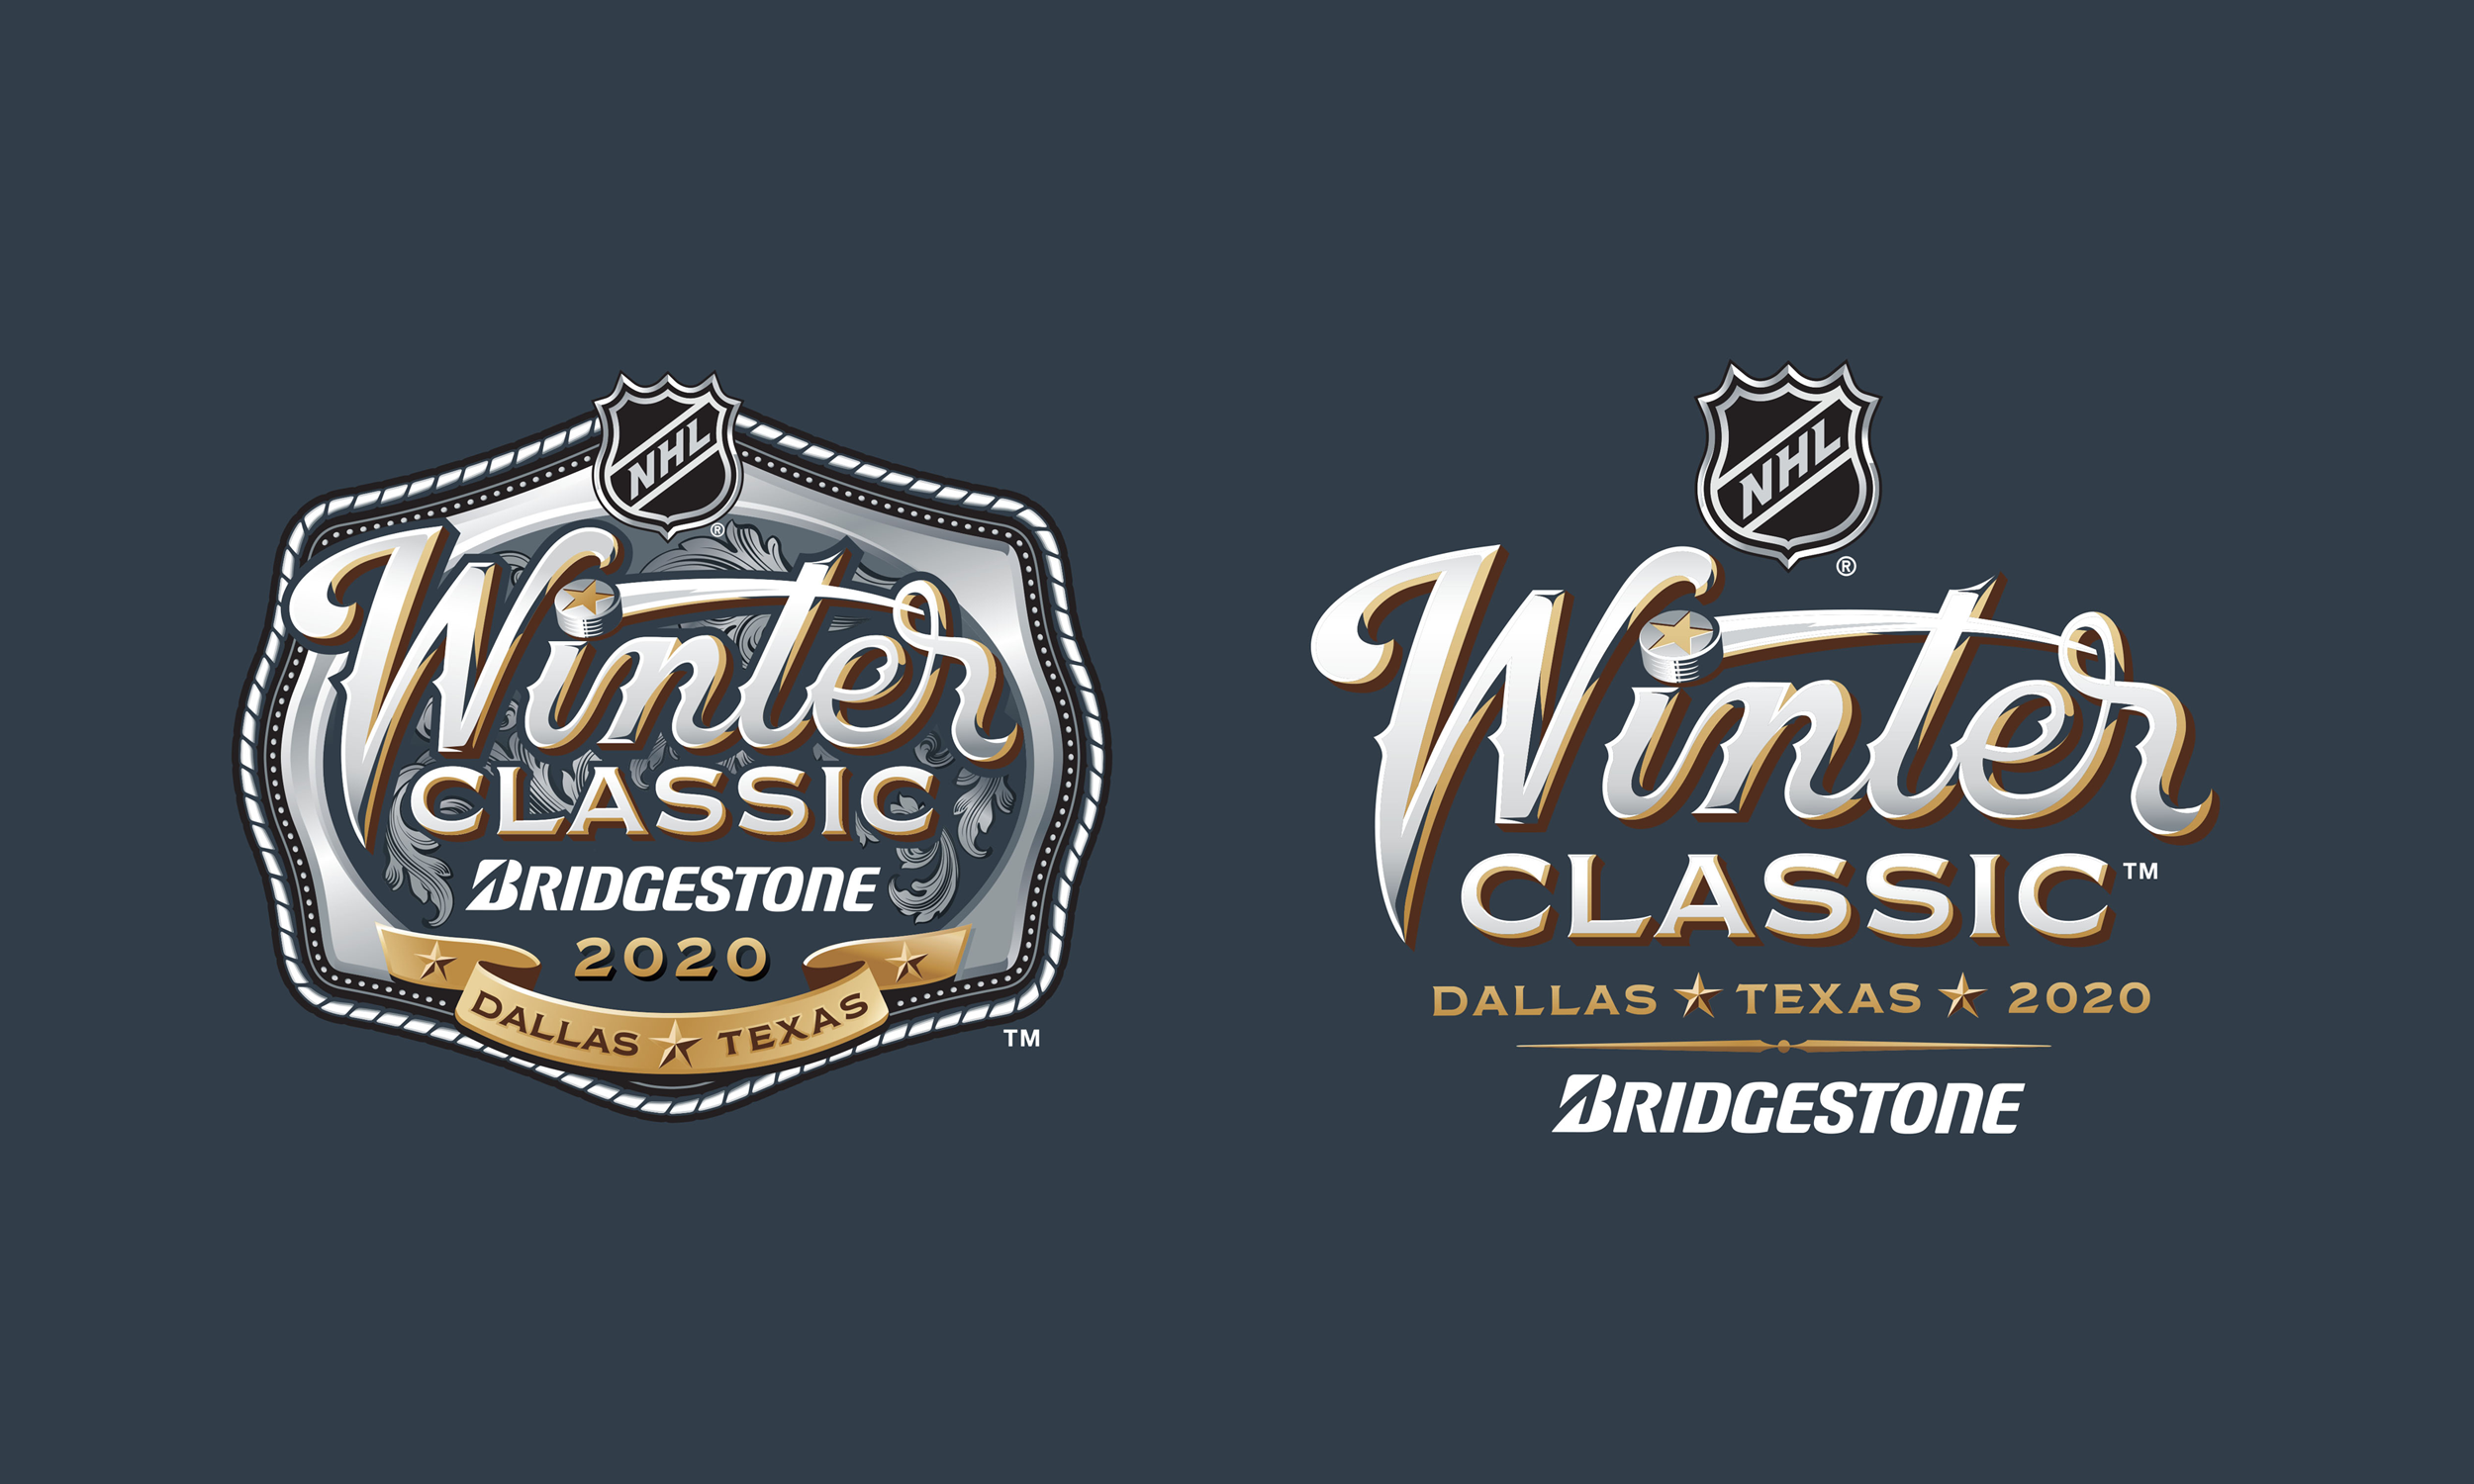 NHL Winter Classic - Wikipedia